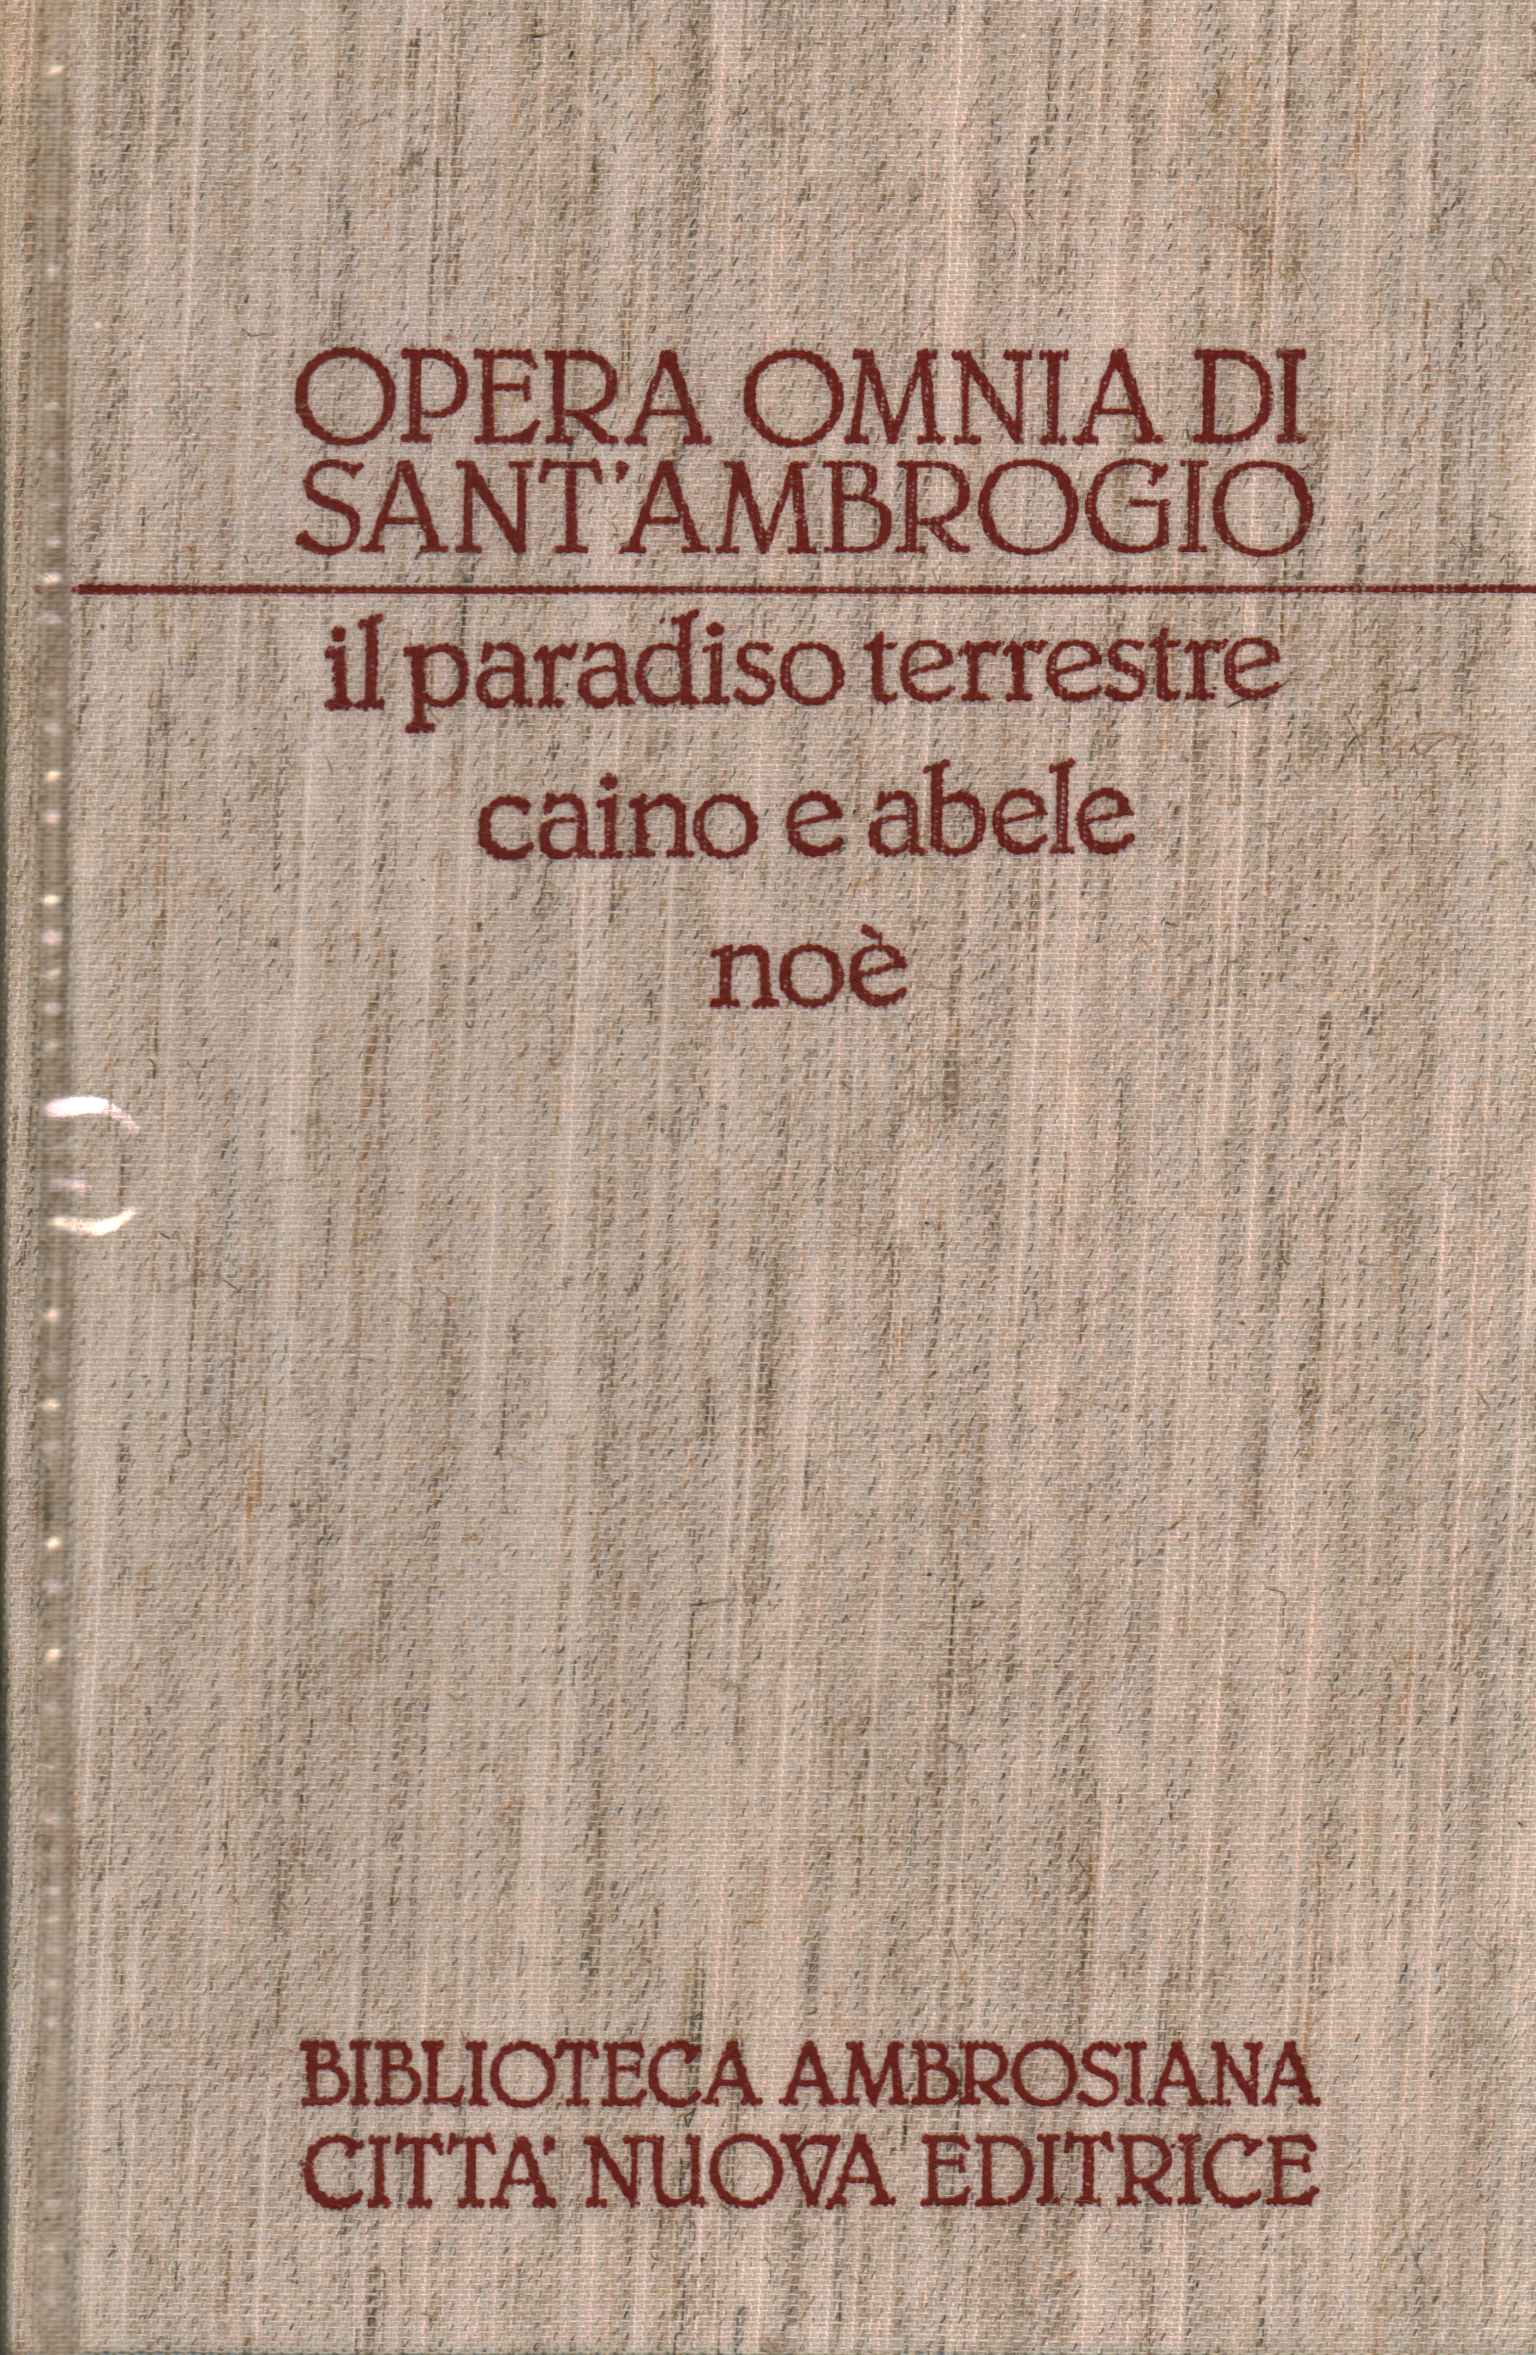 Opera Omnia von Sant'Ambrogio. ODER